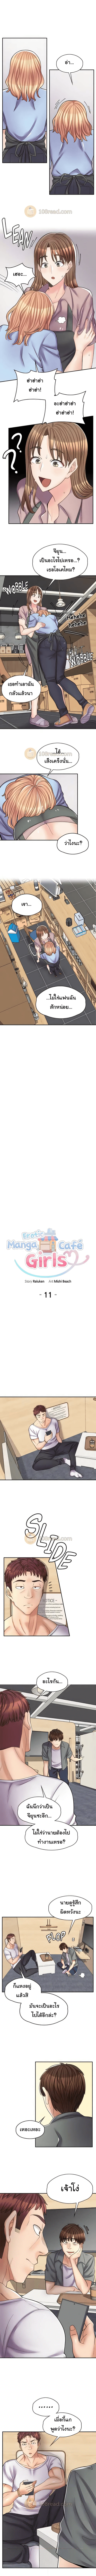 Erotic Manga CafÃ© Girls 11 (1)